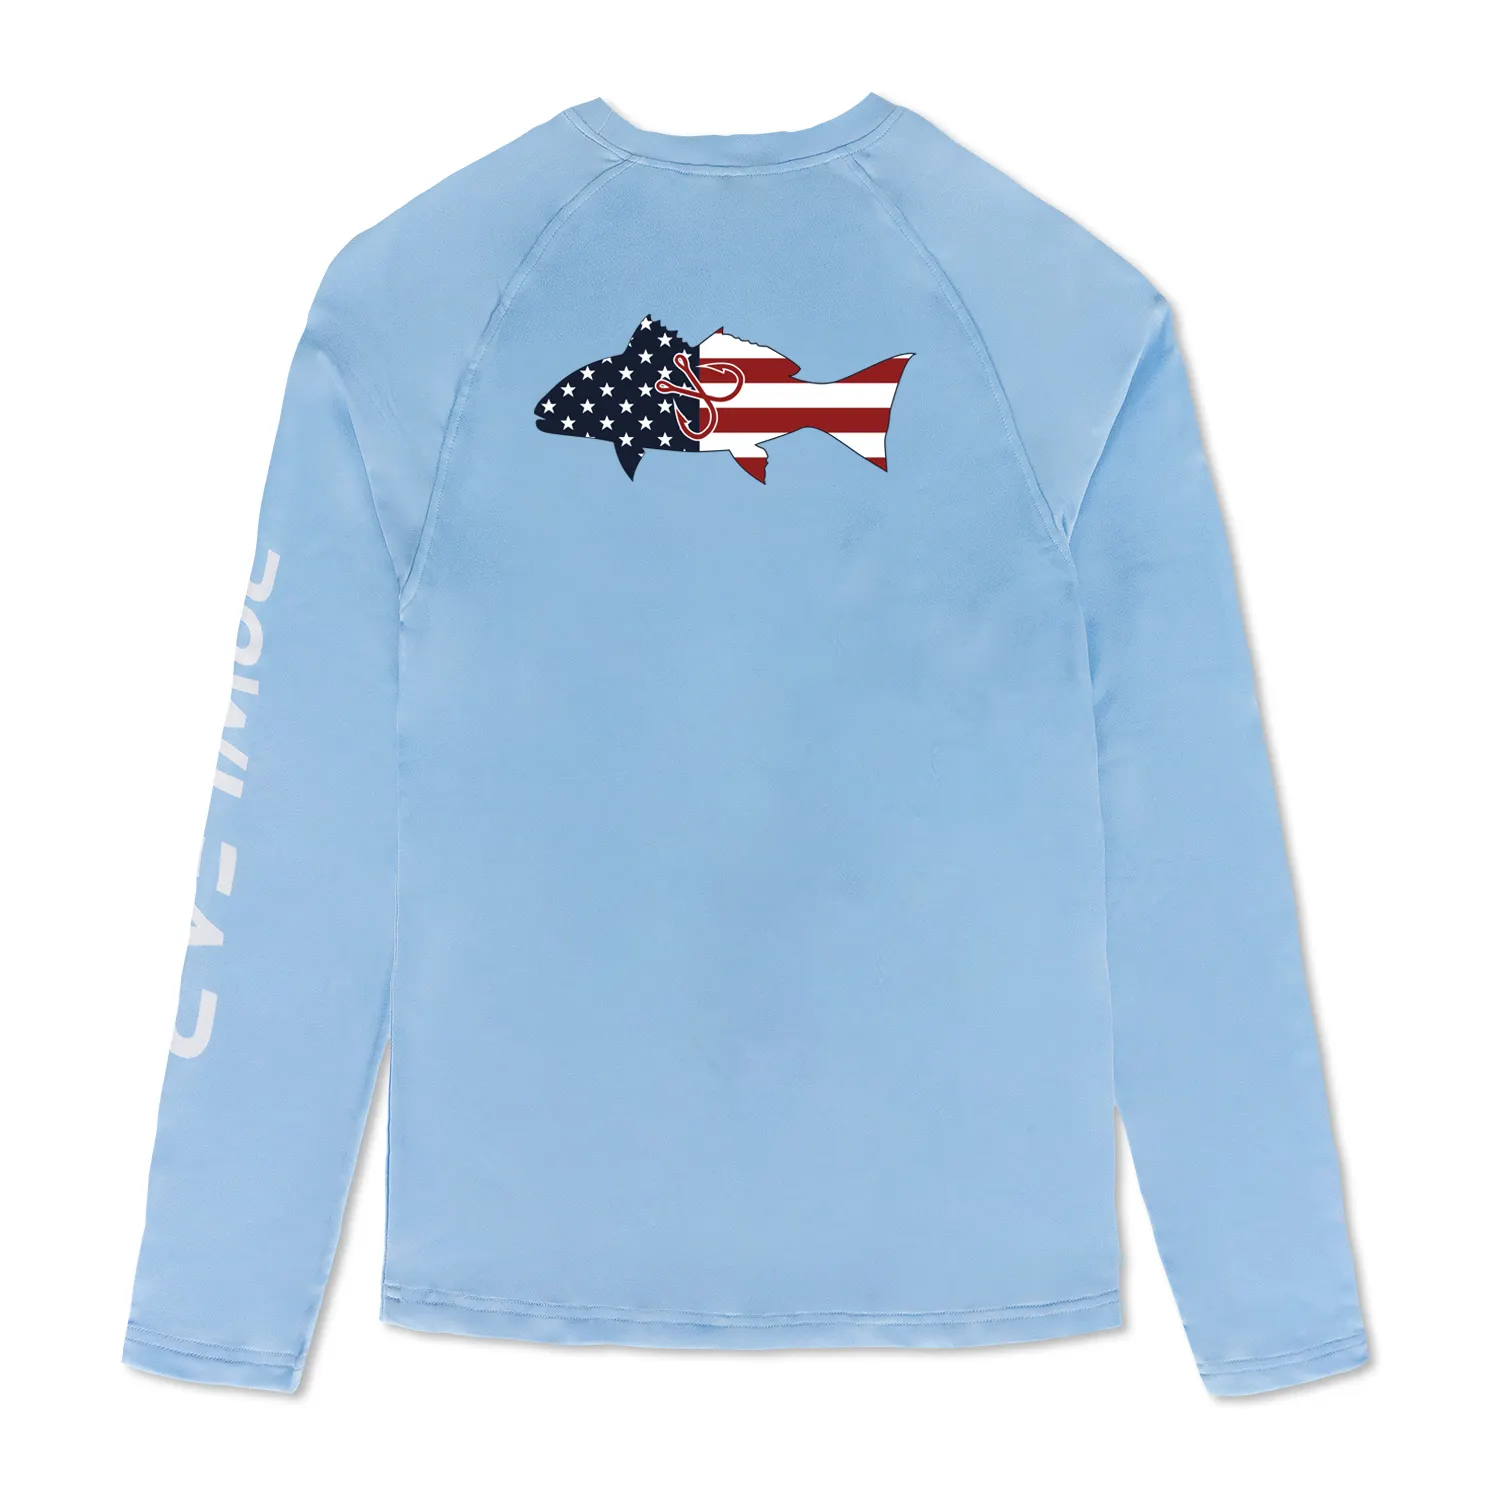 High quality dye sublimation polyester mens kids spf 50 custom uv protection royal blue fishing shirt